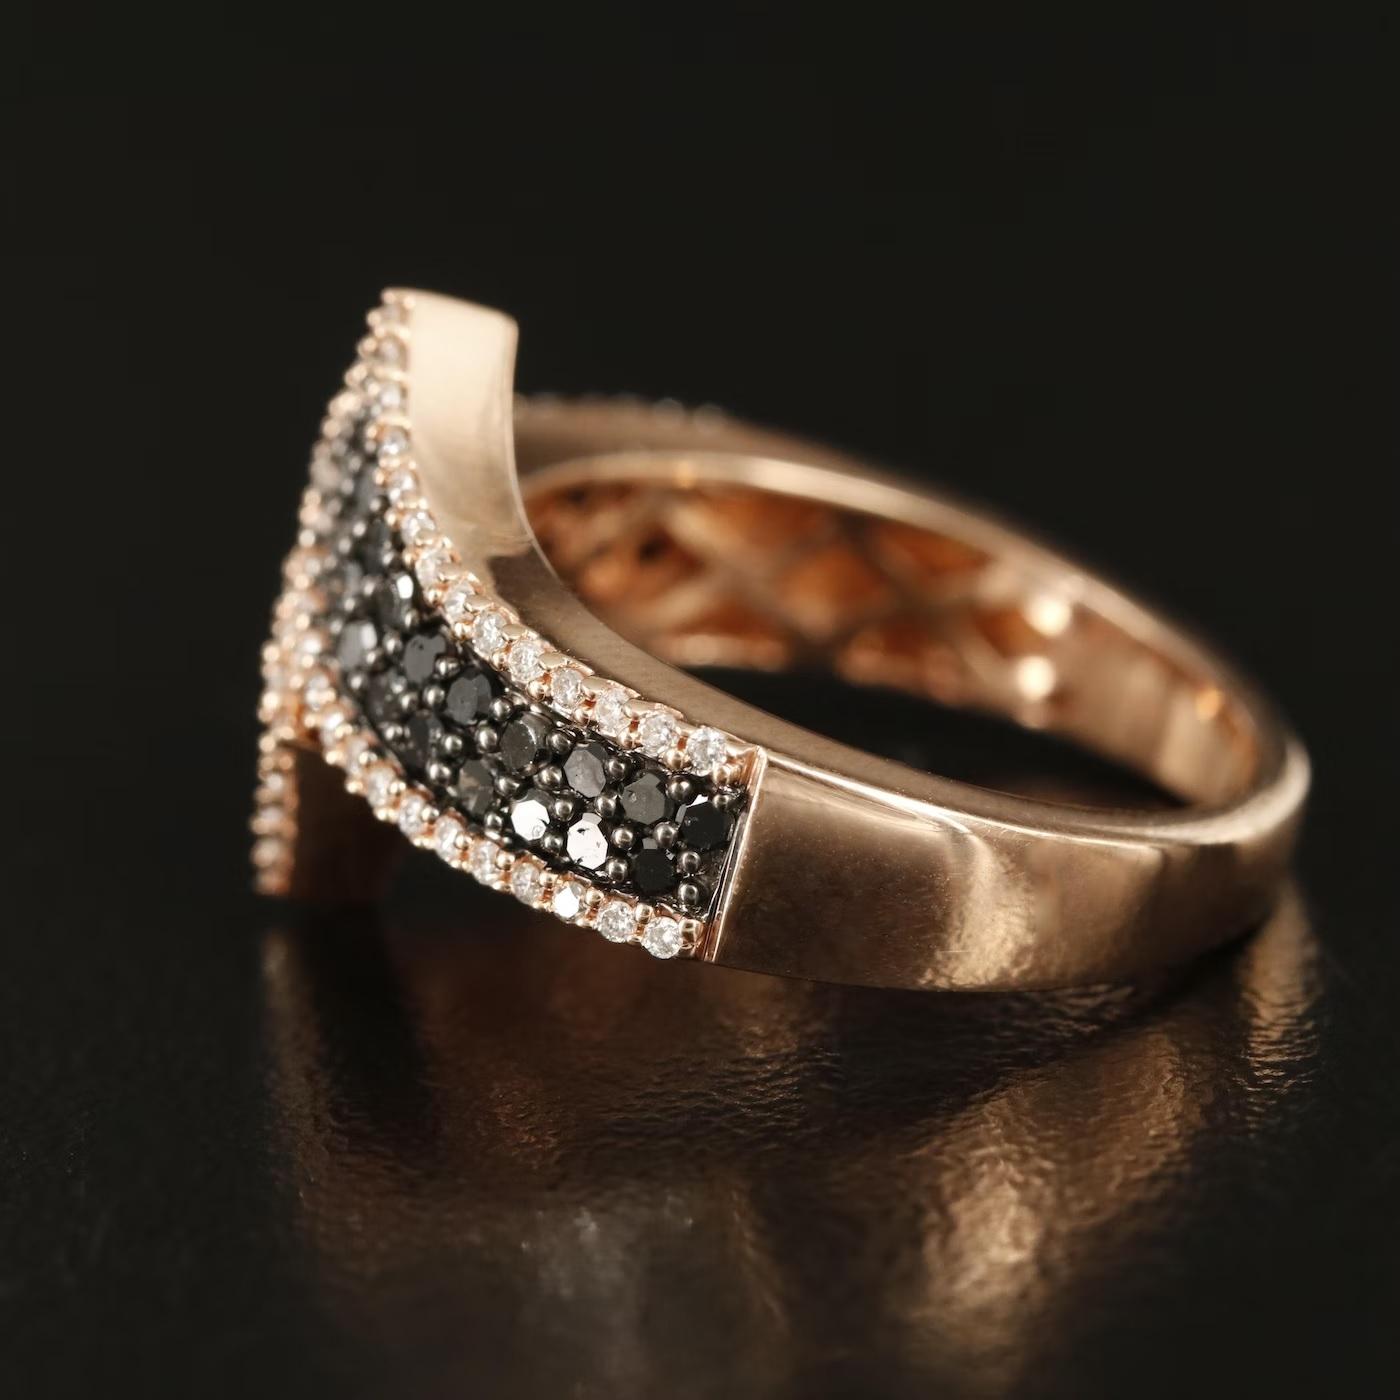 Round Cut $4450 / New / Karen Marchesa Designer Bypass Ring / 1.05 CT Diamond / 14K Gold For Sale